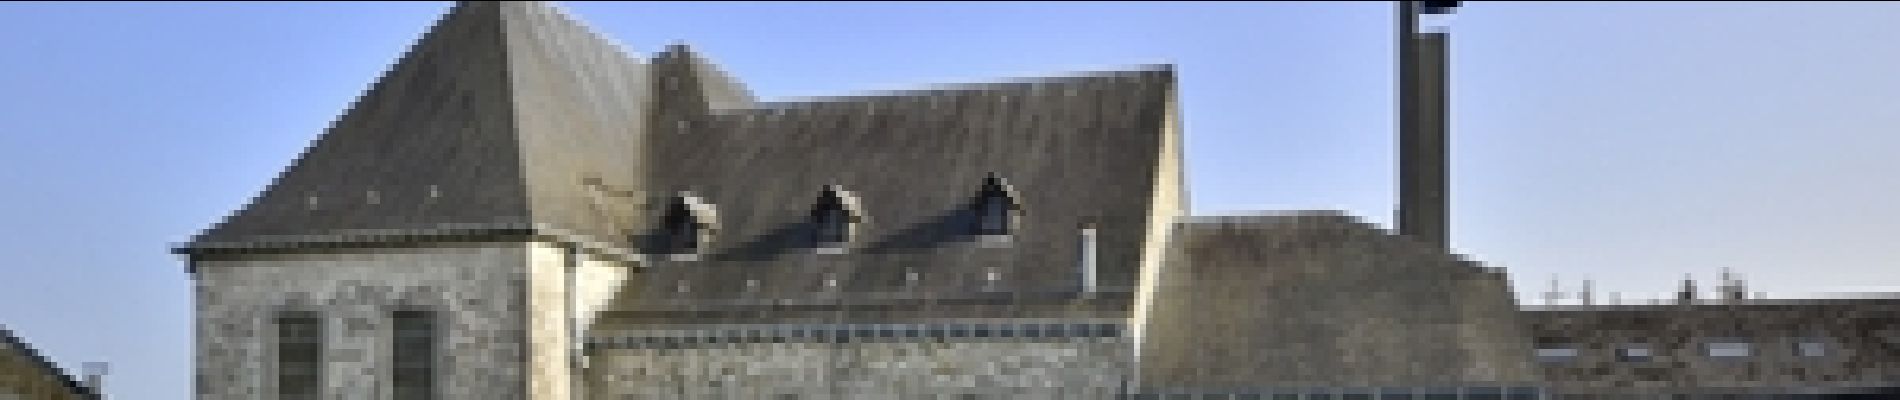 POI Modave - Eglise Saint-Martin - Photo